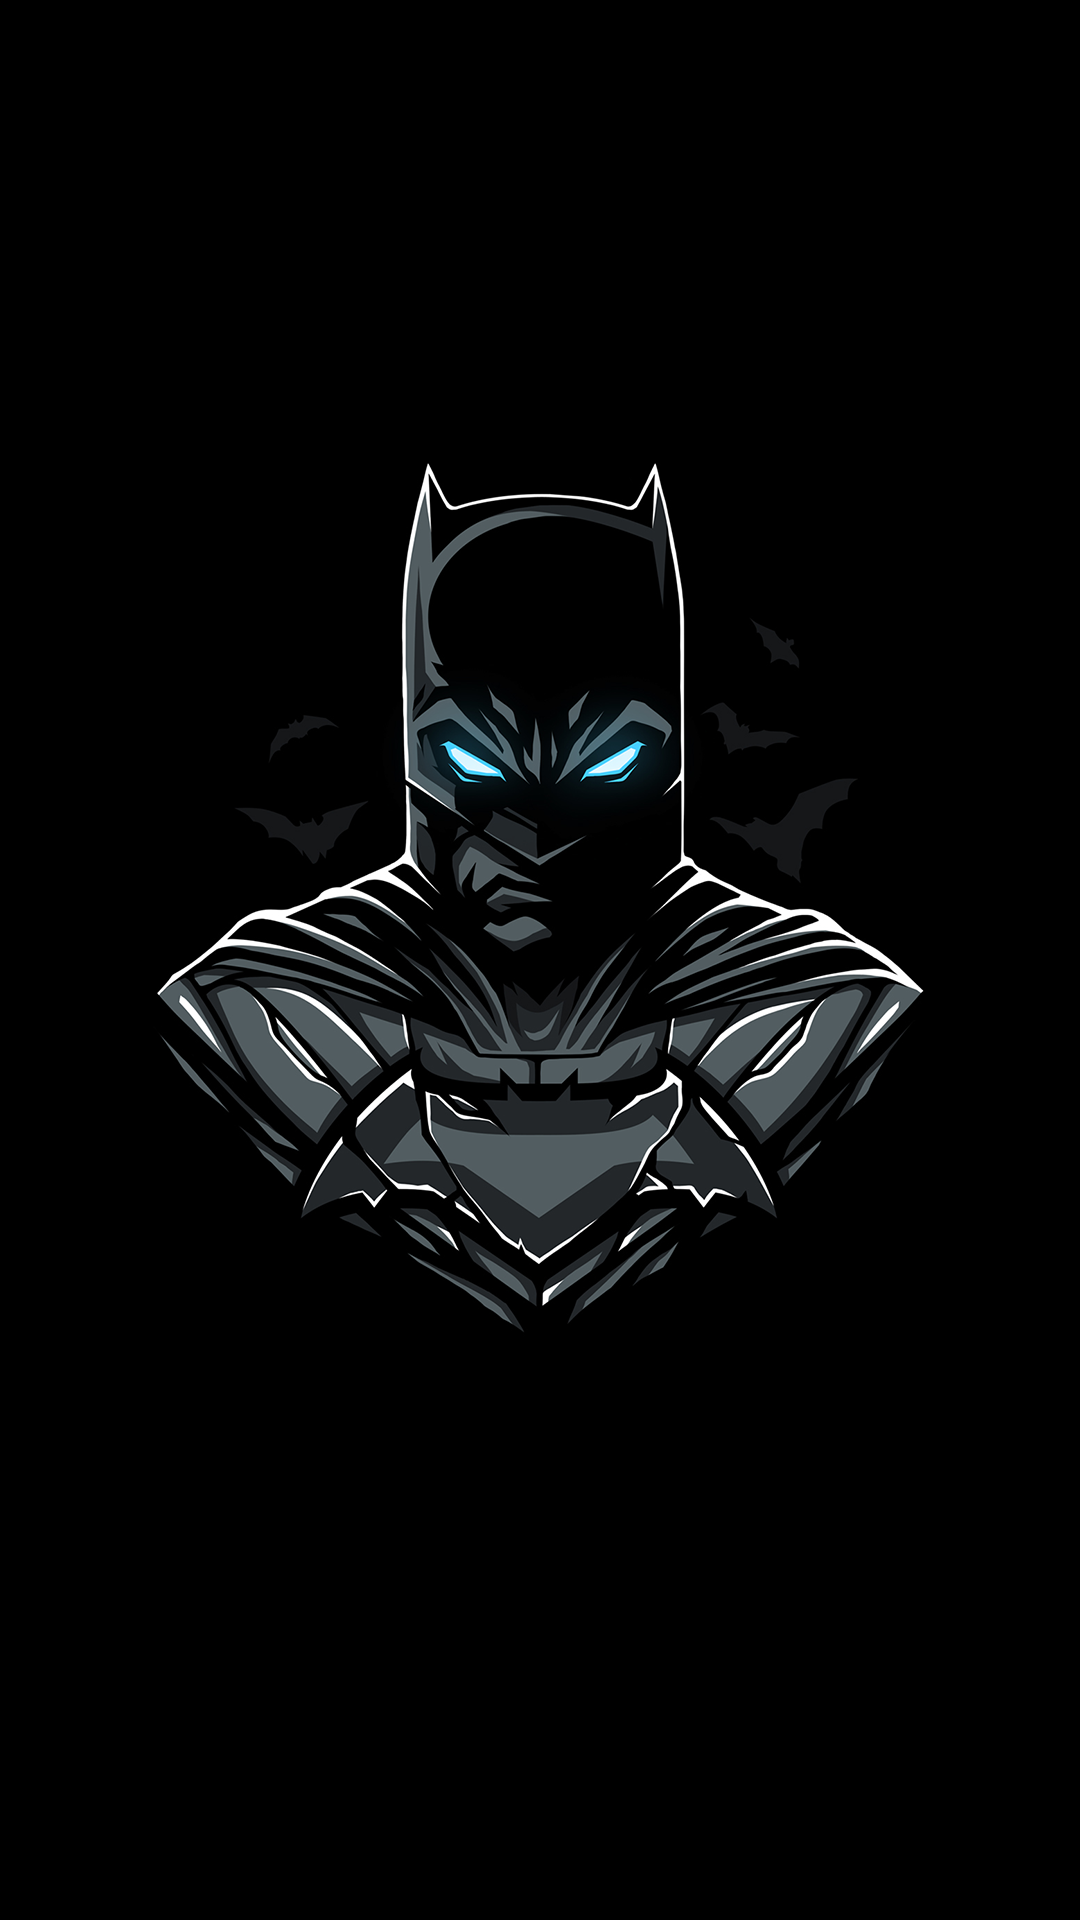 Amoled bat!. Batman wallpaper iphone, Batman artwork, Batman